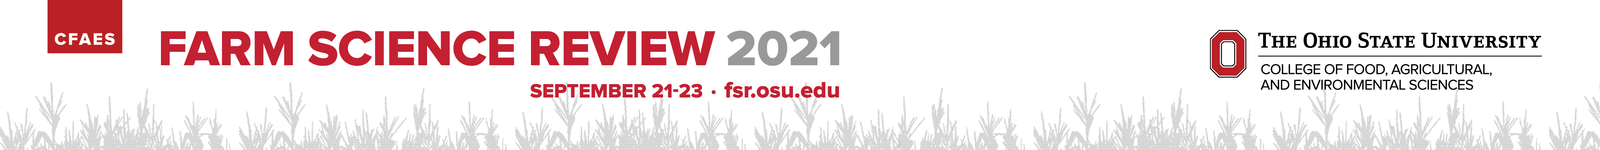 Farm Science Review 2021 logo